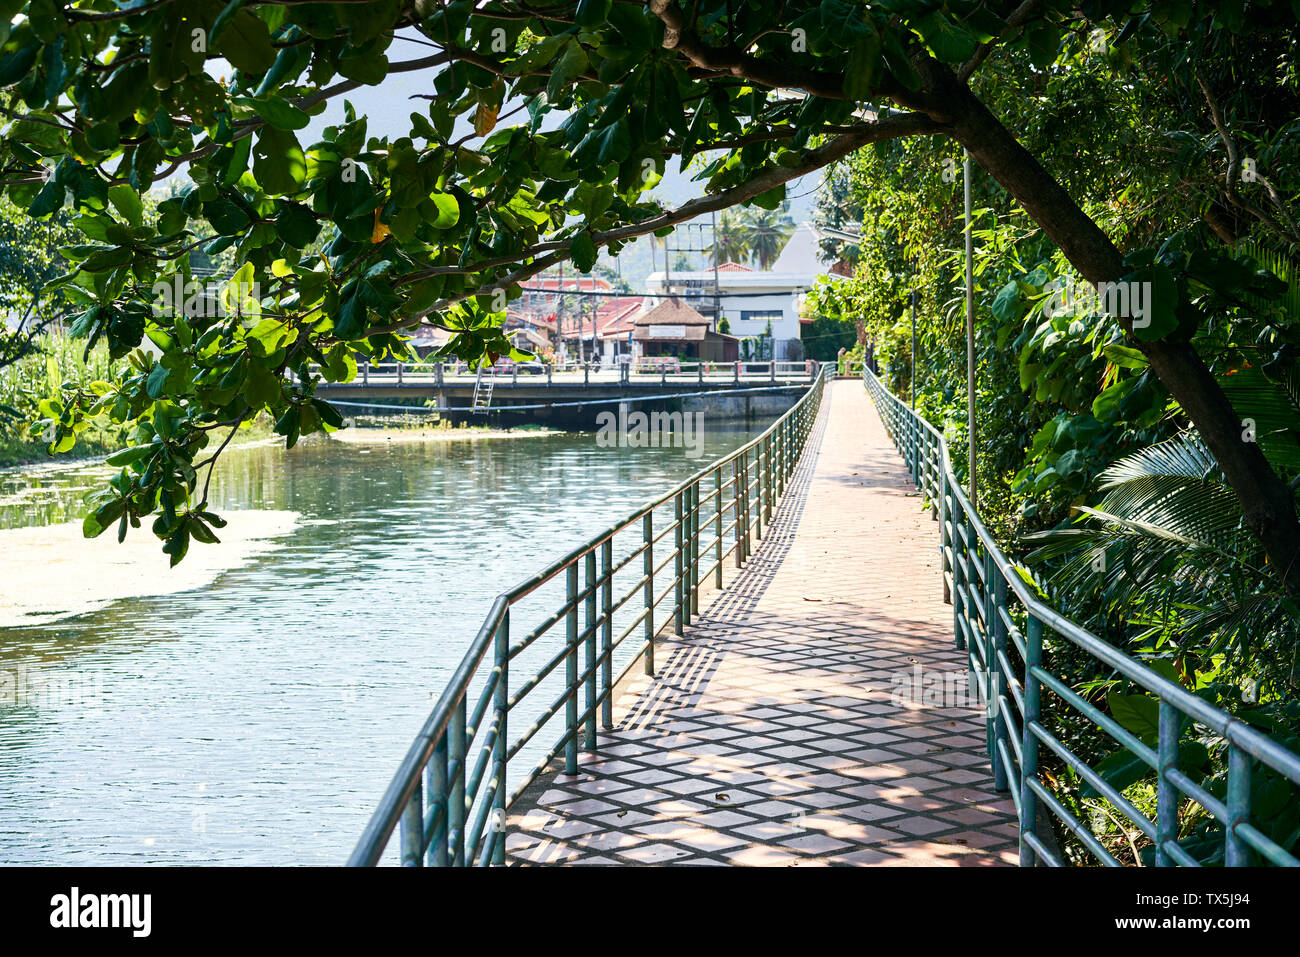 Brick pedestrian bridge on river in tropical island. scenic road under green mangrove trees Stock Photo